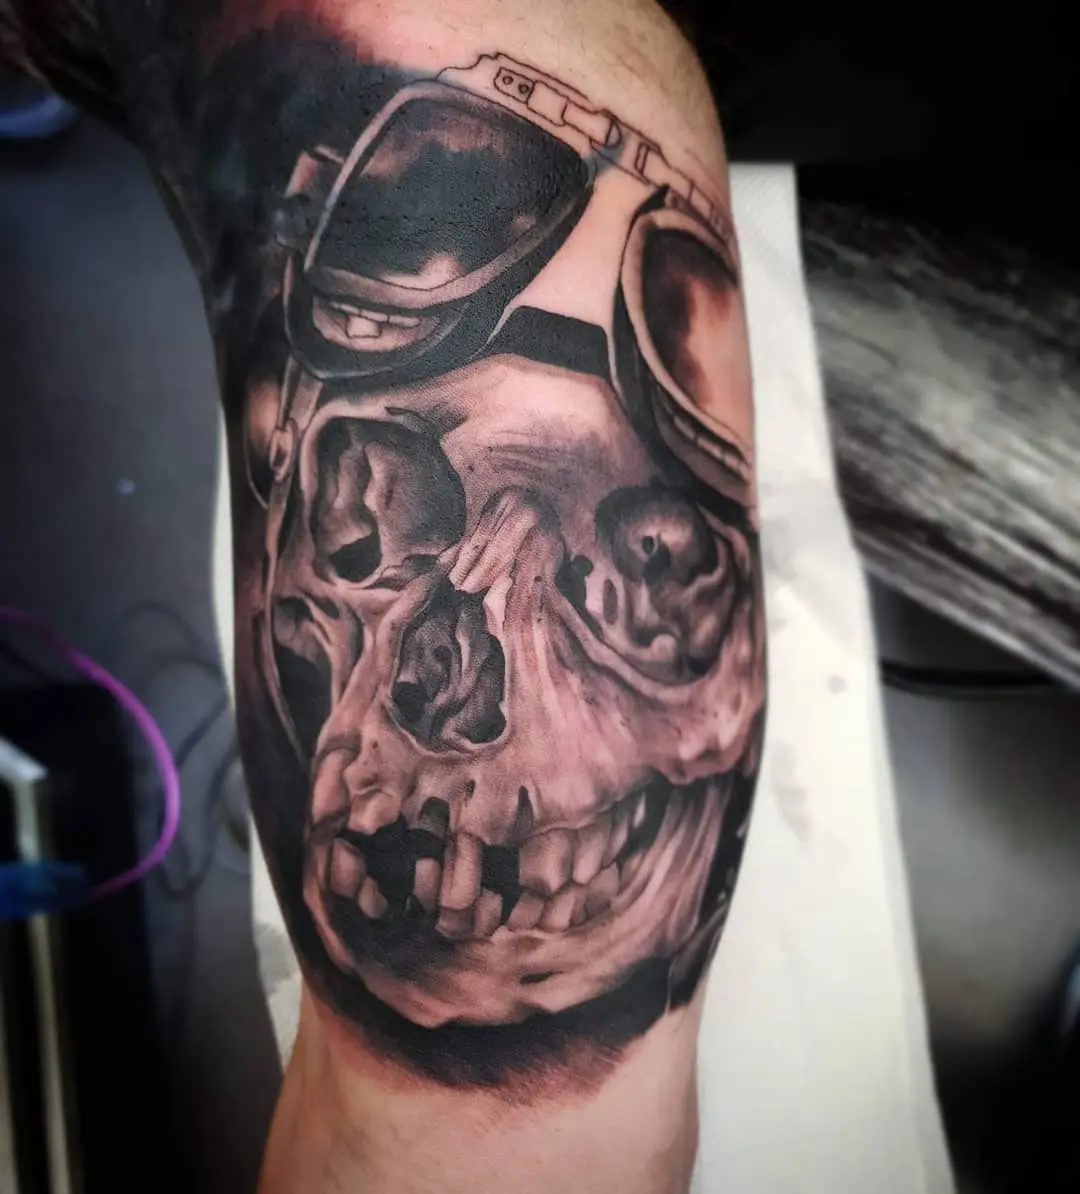 Pilot skull tattoo | More art and tattoos here; www.facebook… | Flickr